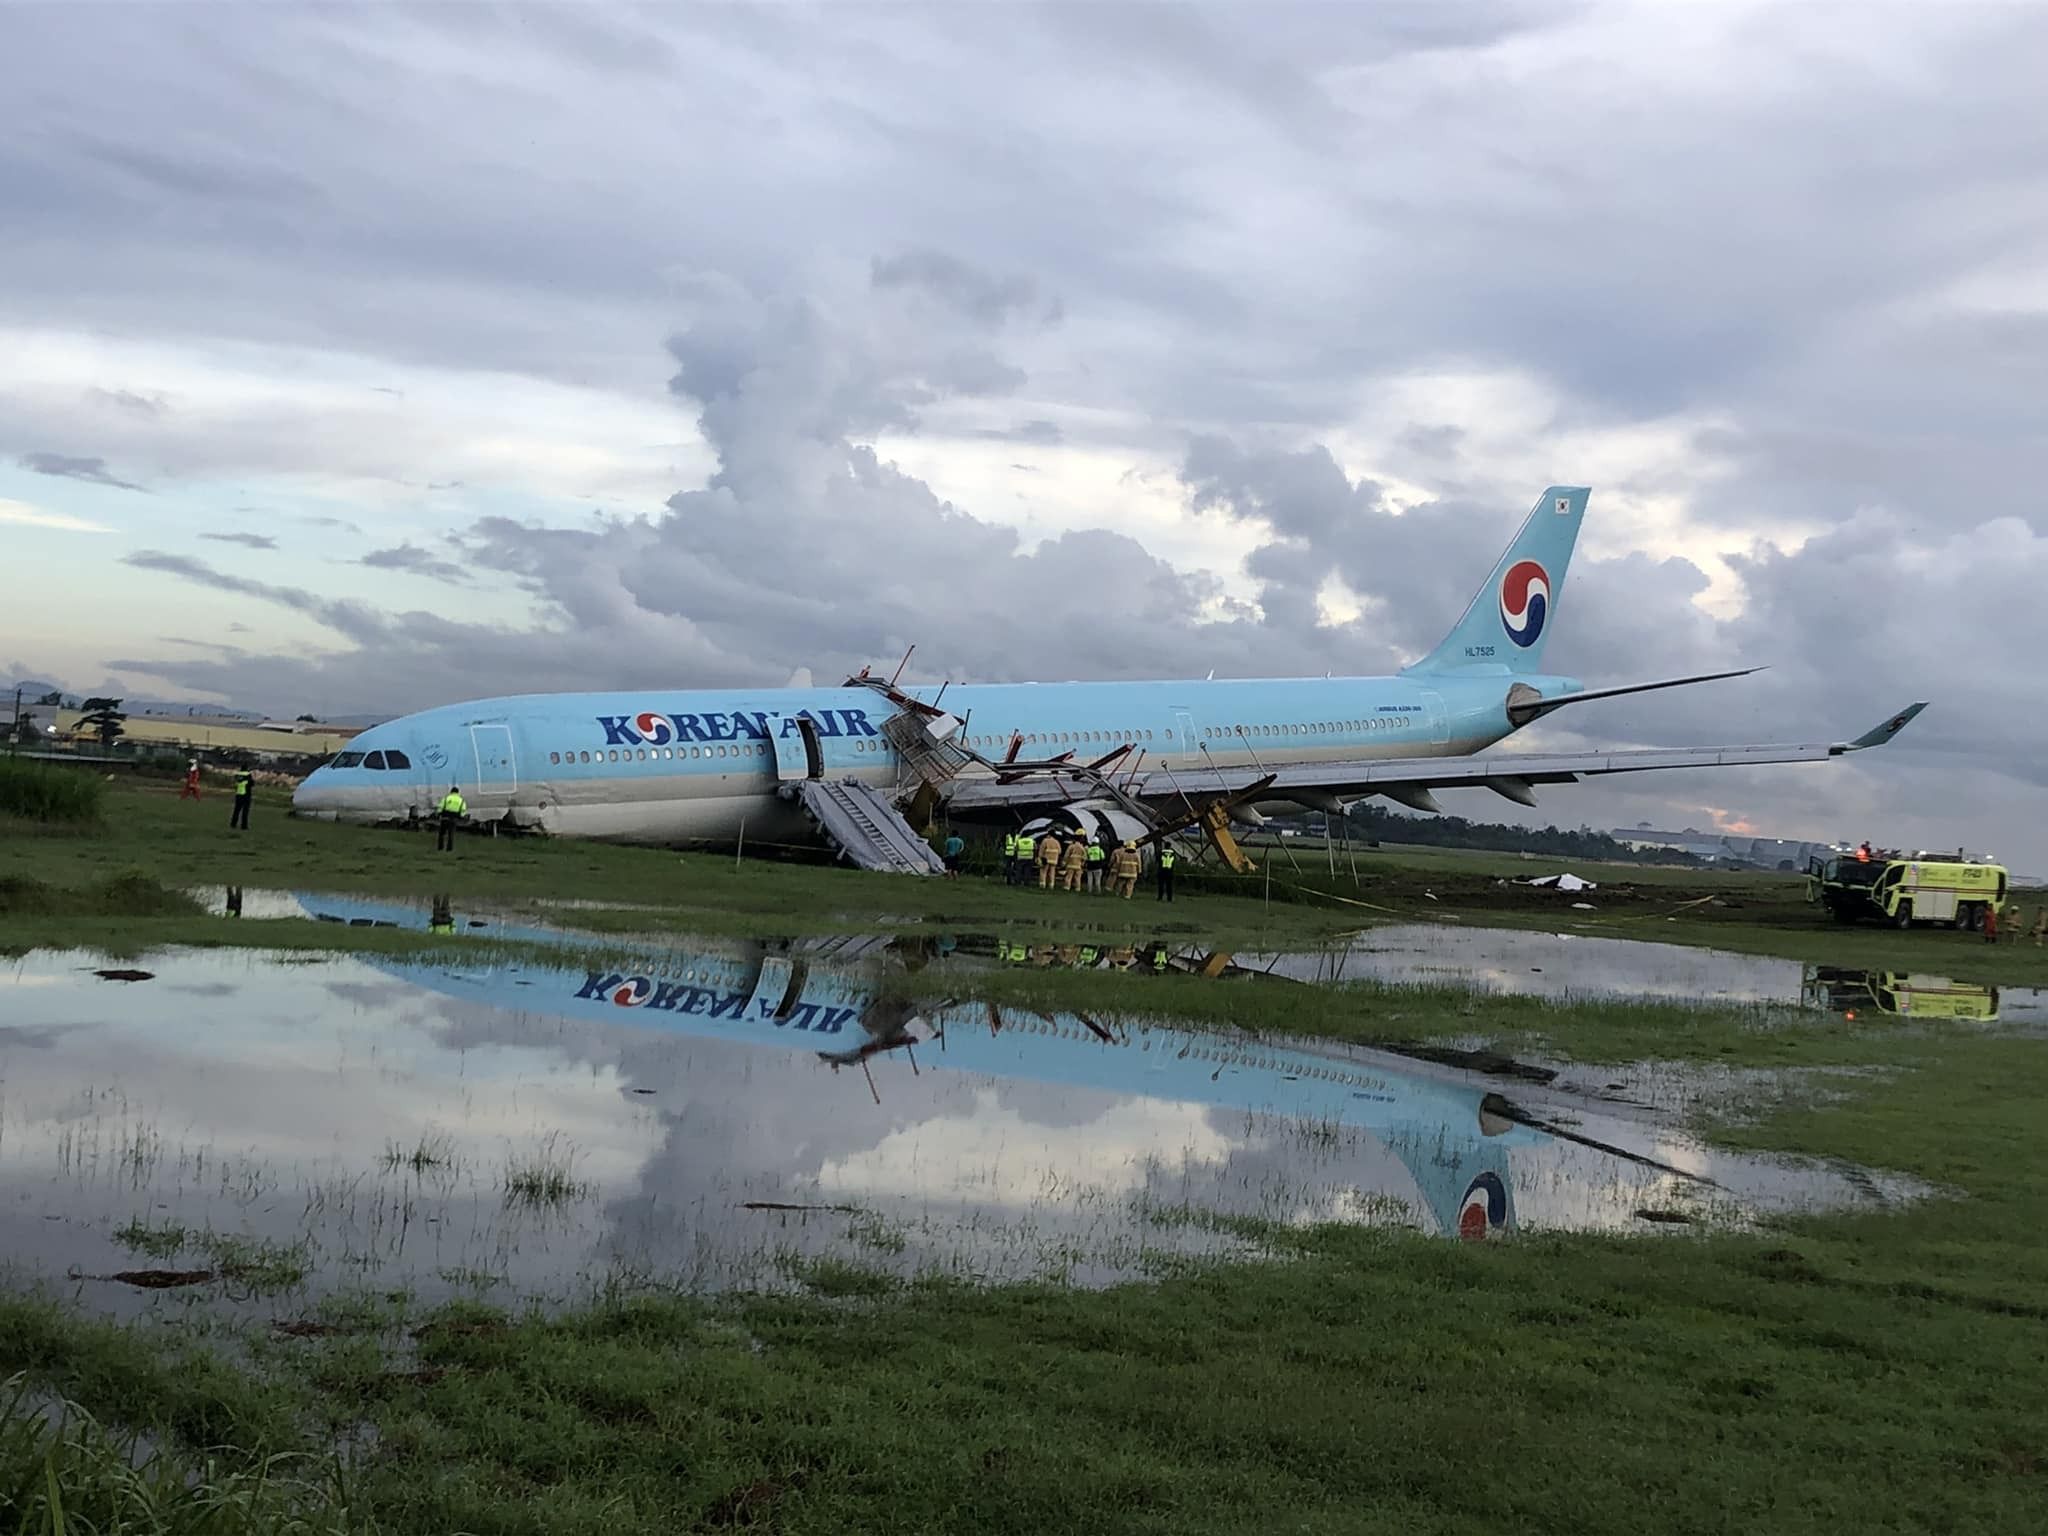 Korean Air A330 on the ground after crash in Cebu